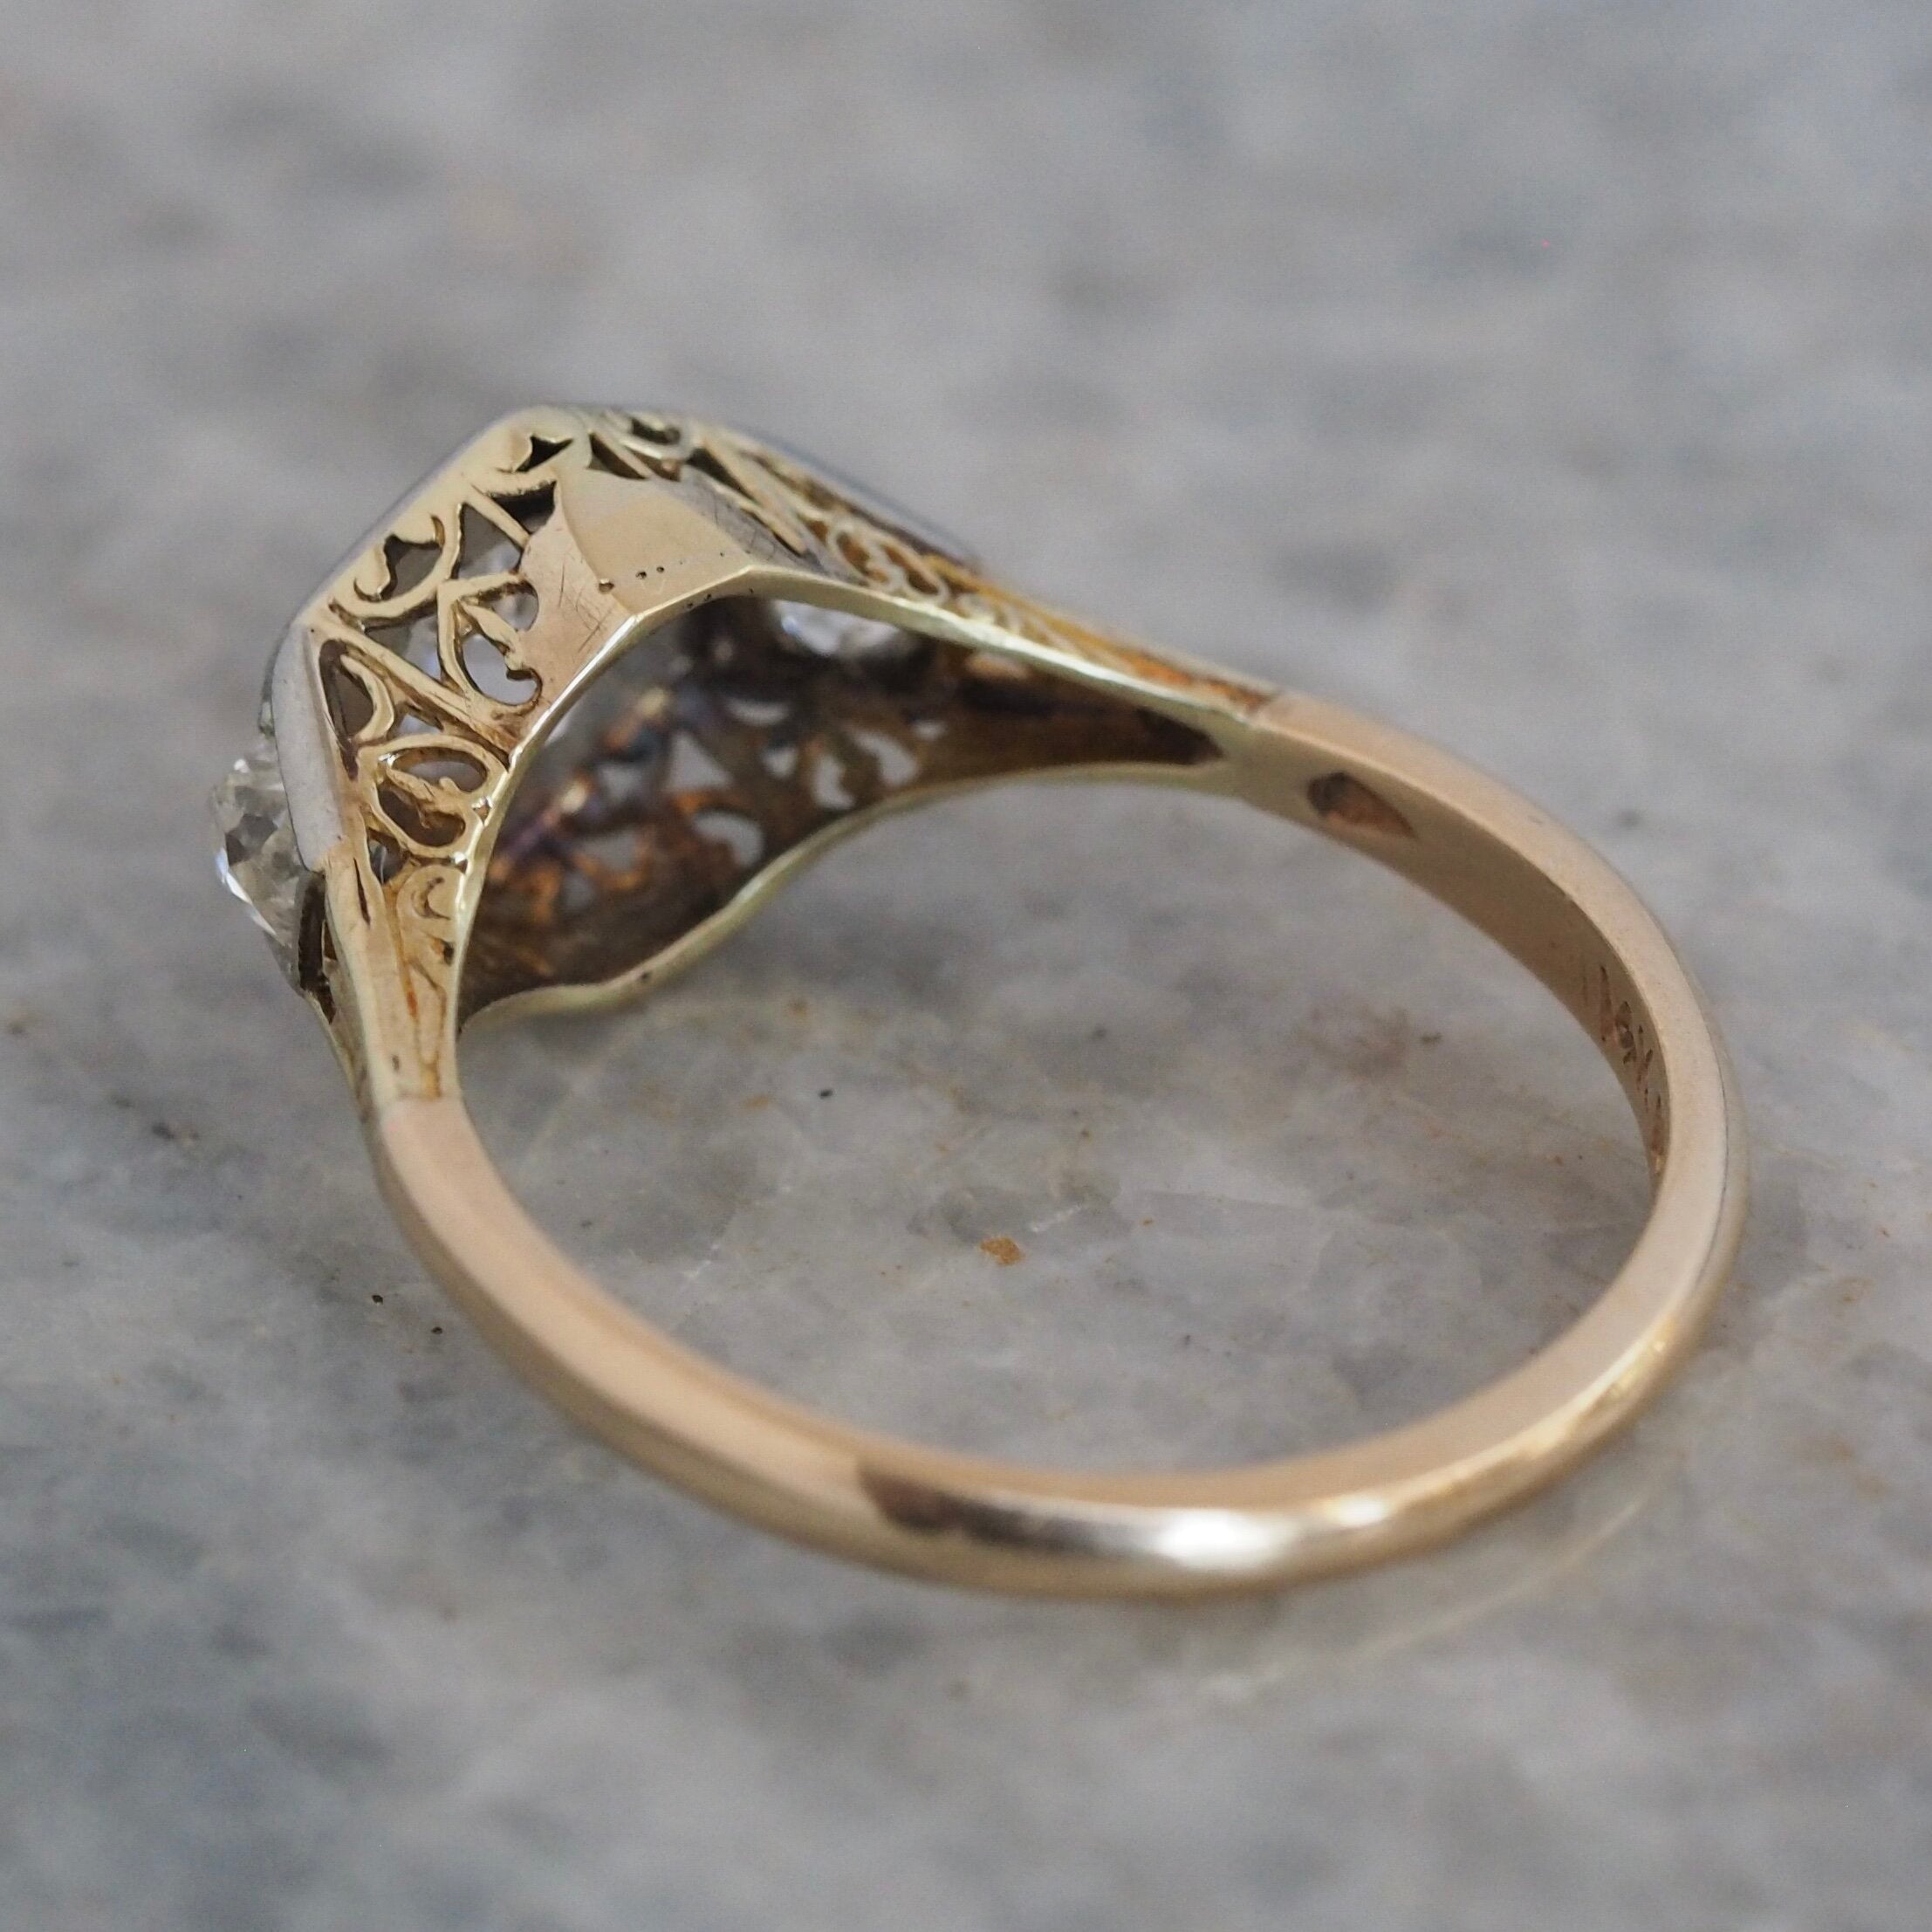 Antique Art Deco 14k Gold Old Mine Cut Diamond Ring